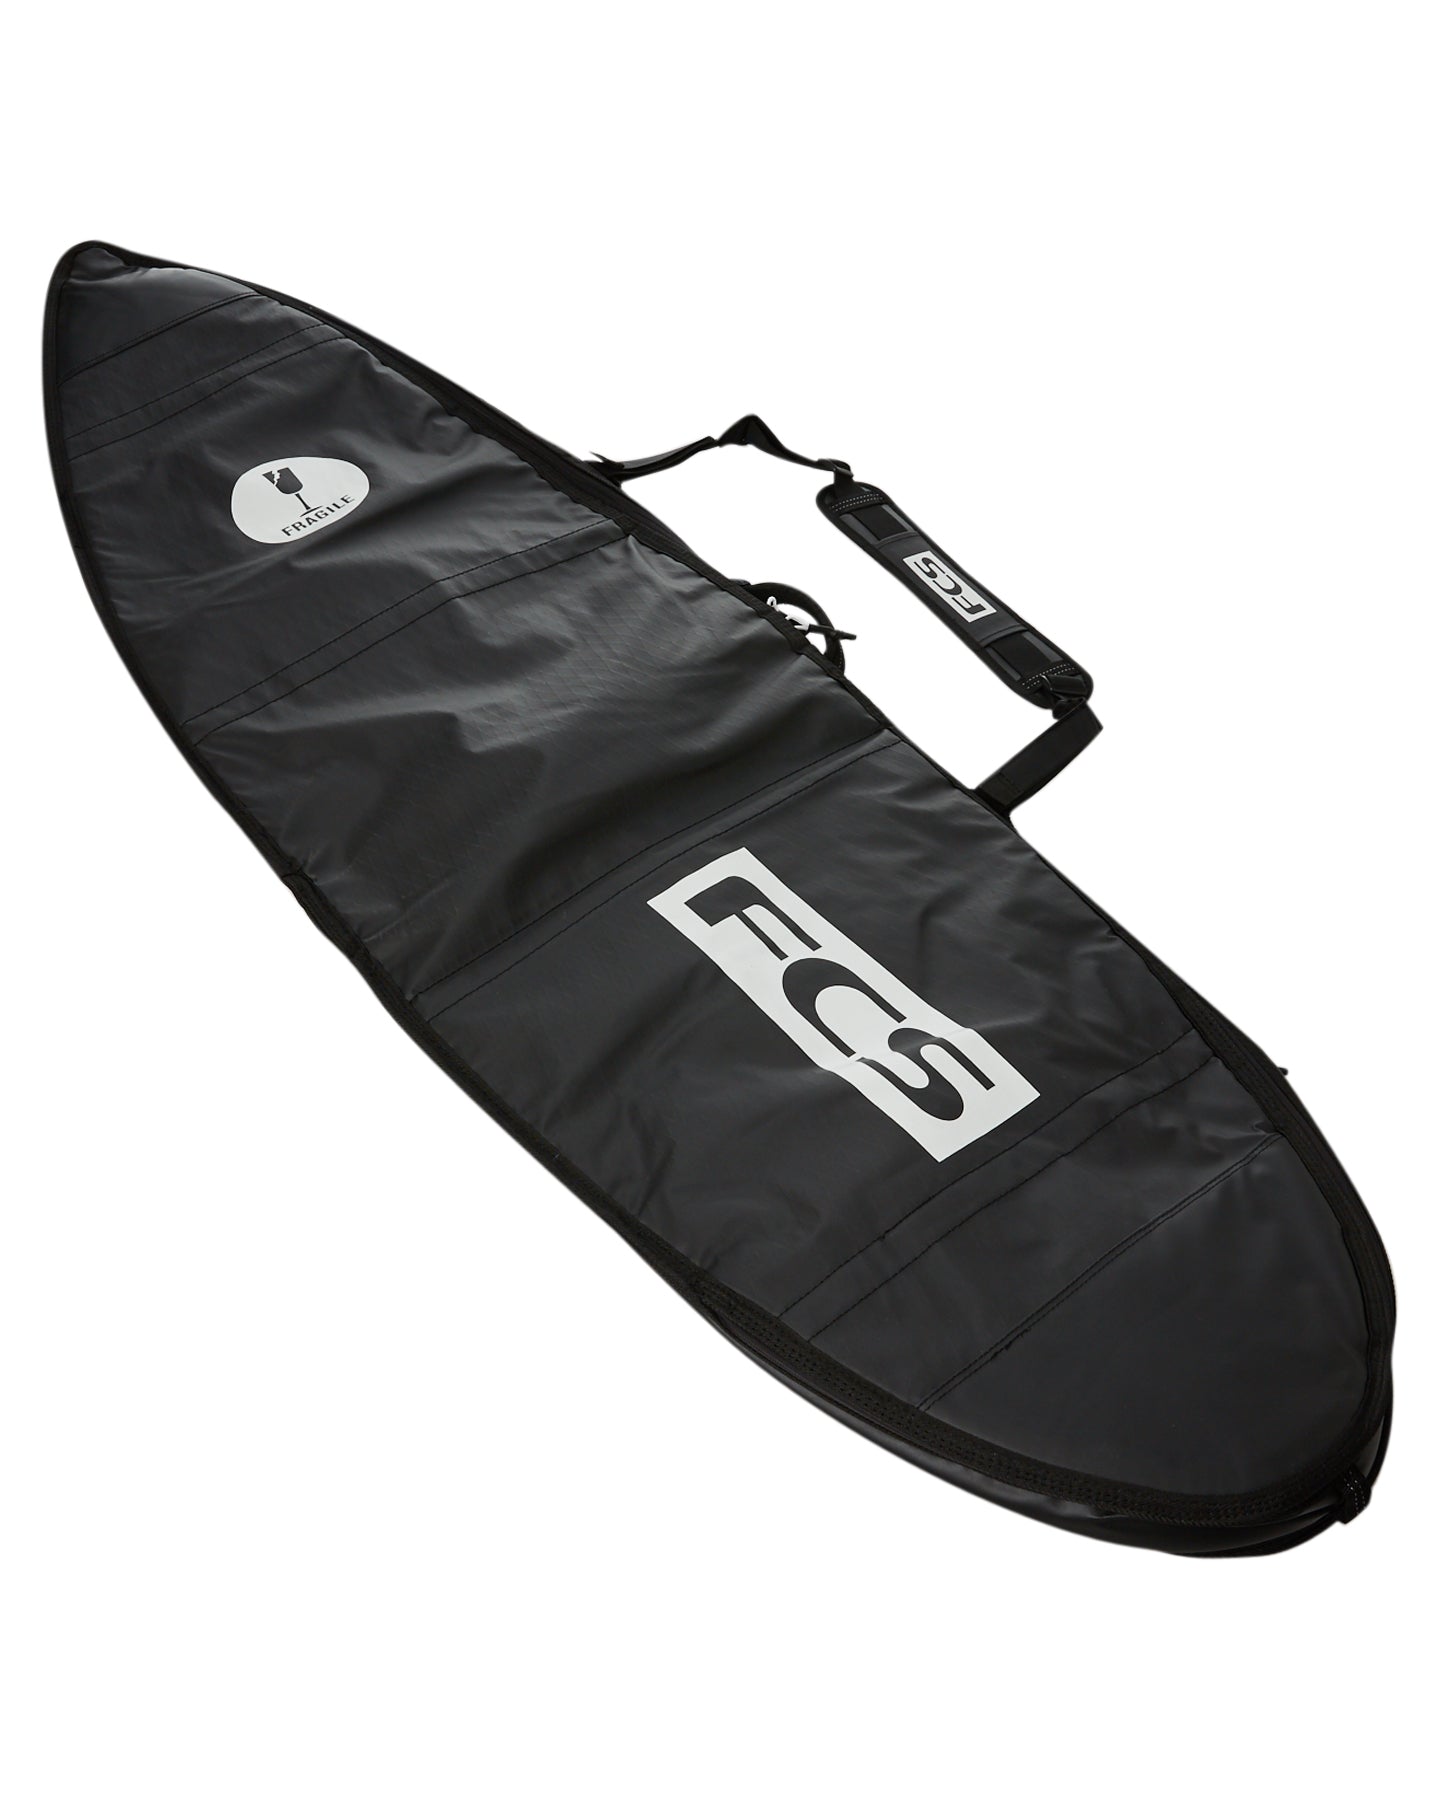 FCS Travel 1 All Purpose Boardbag Black-Grey 6ft0in